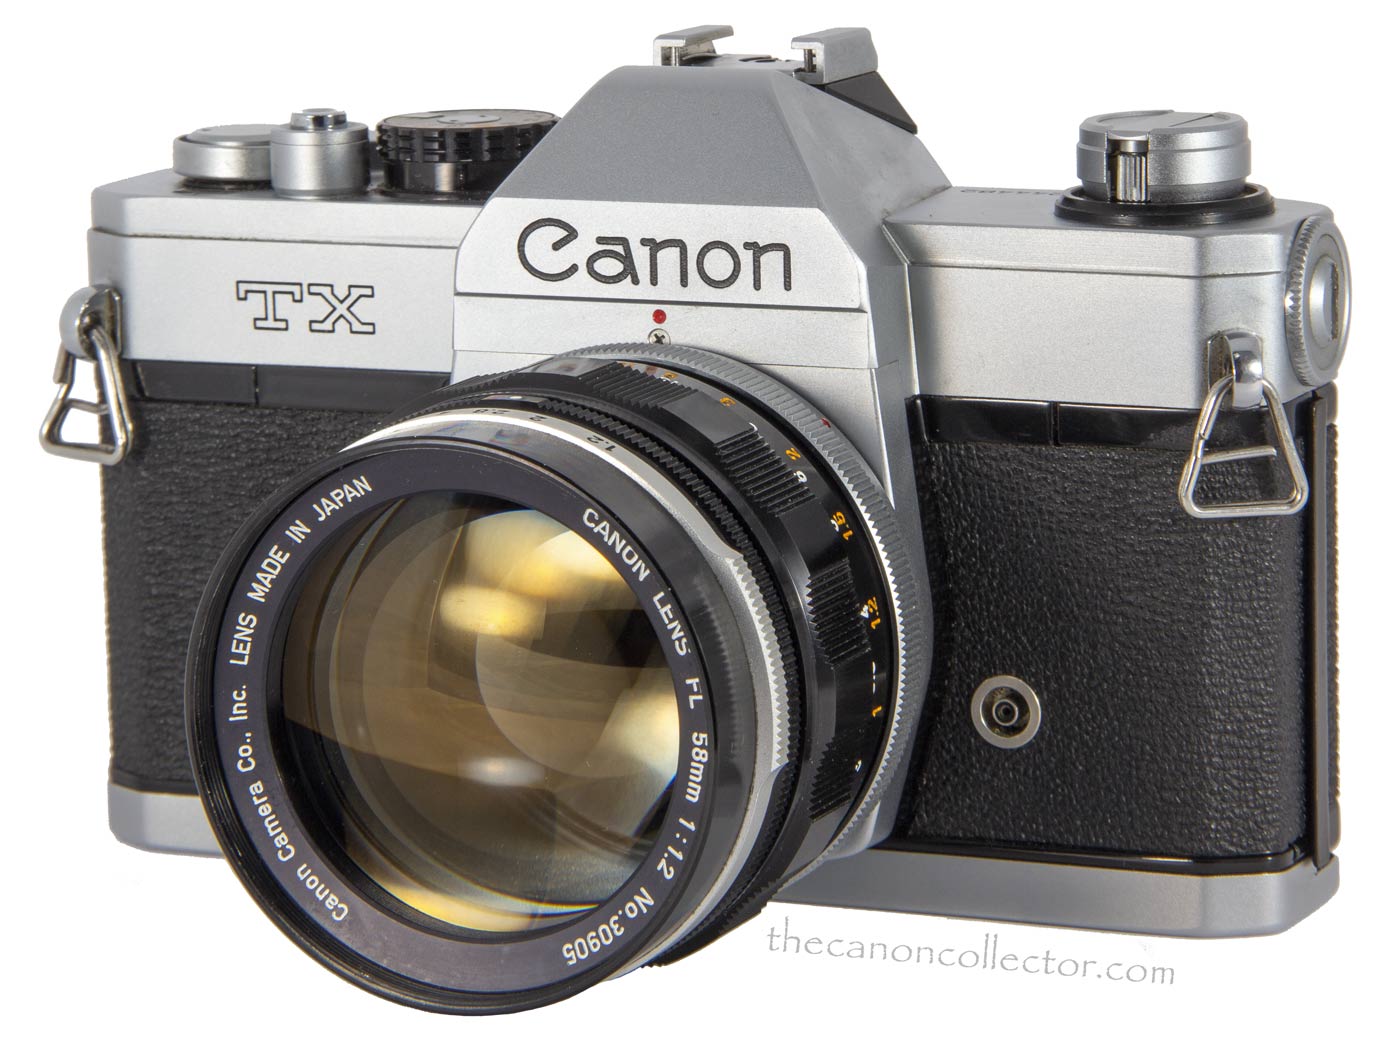 The Canon TX Camera